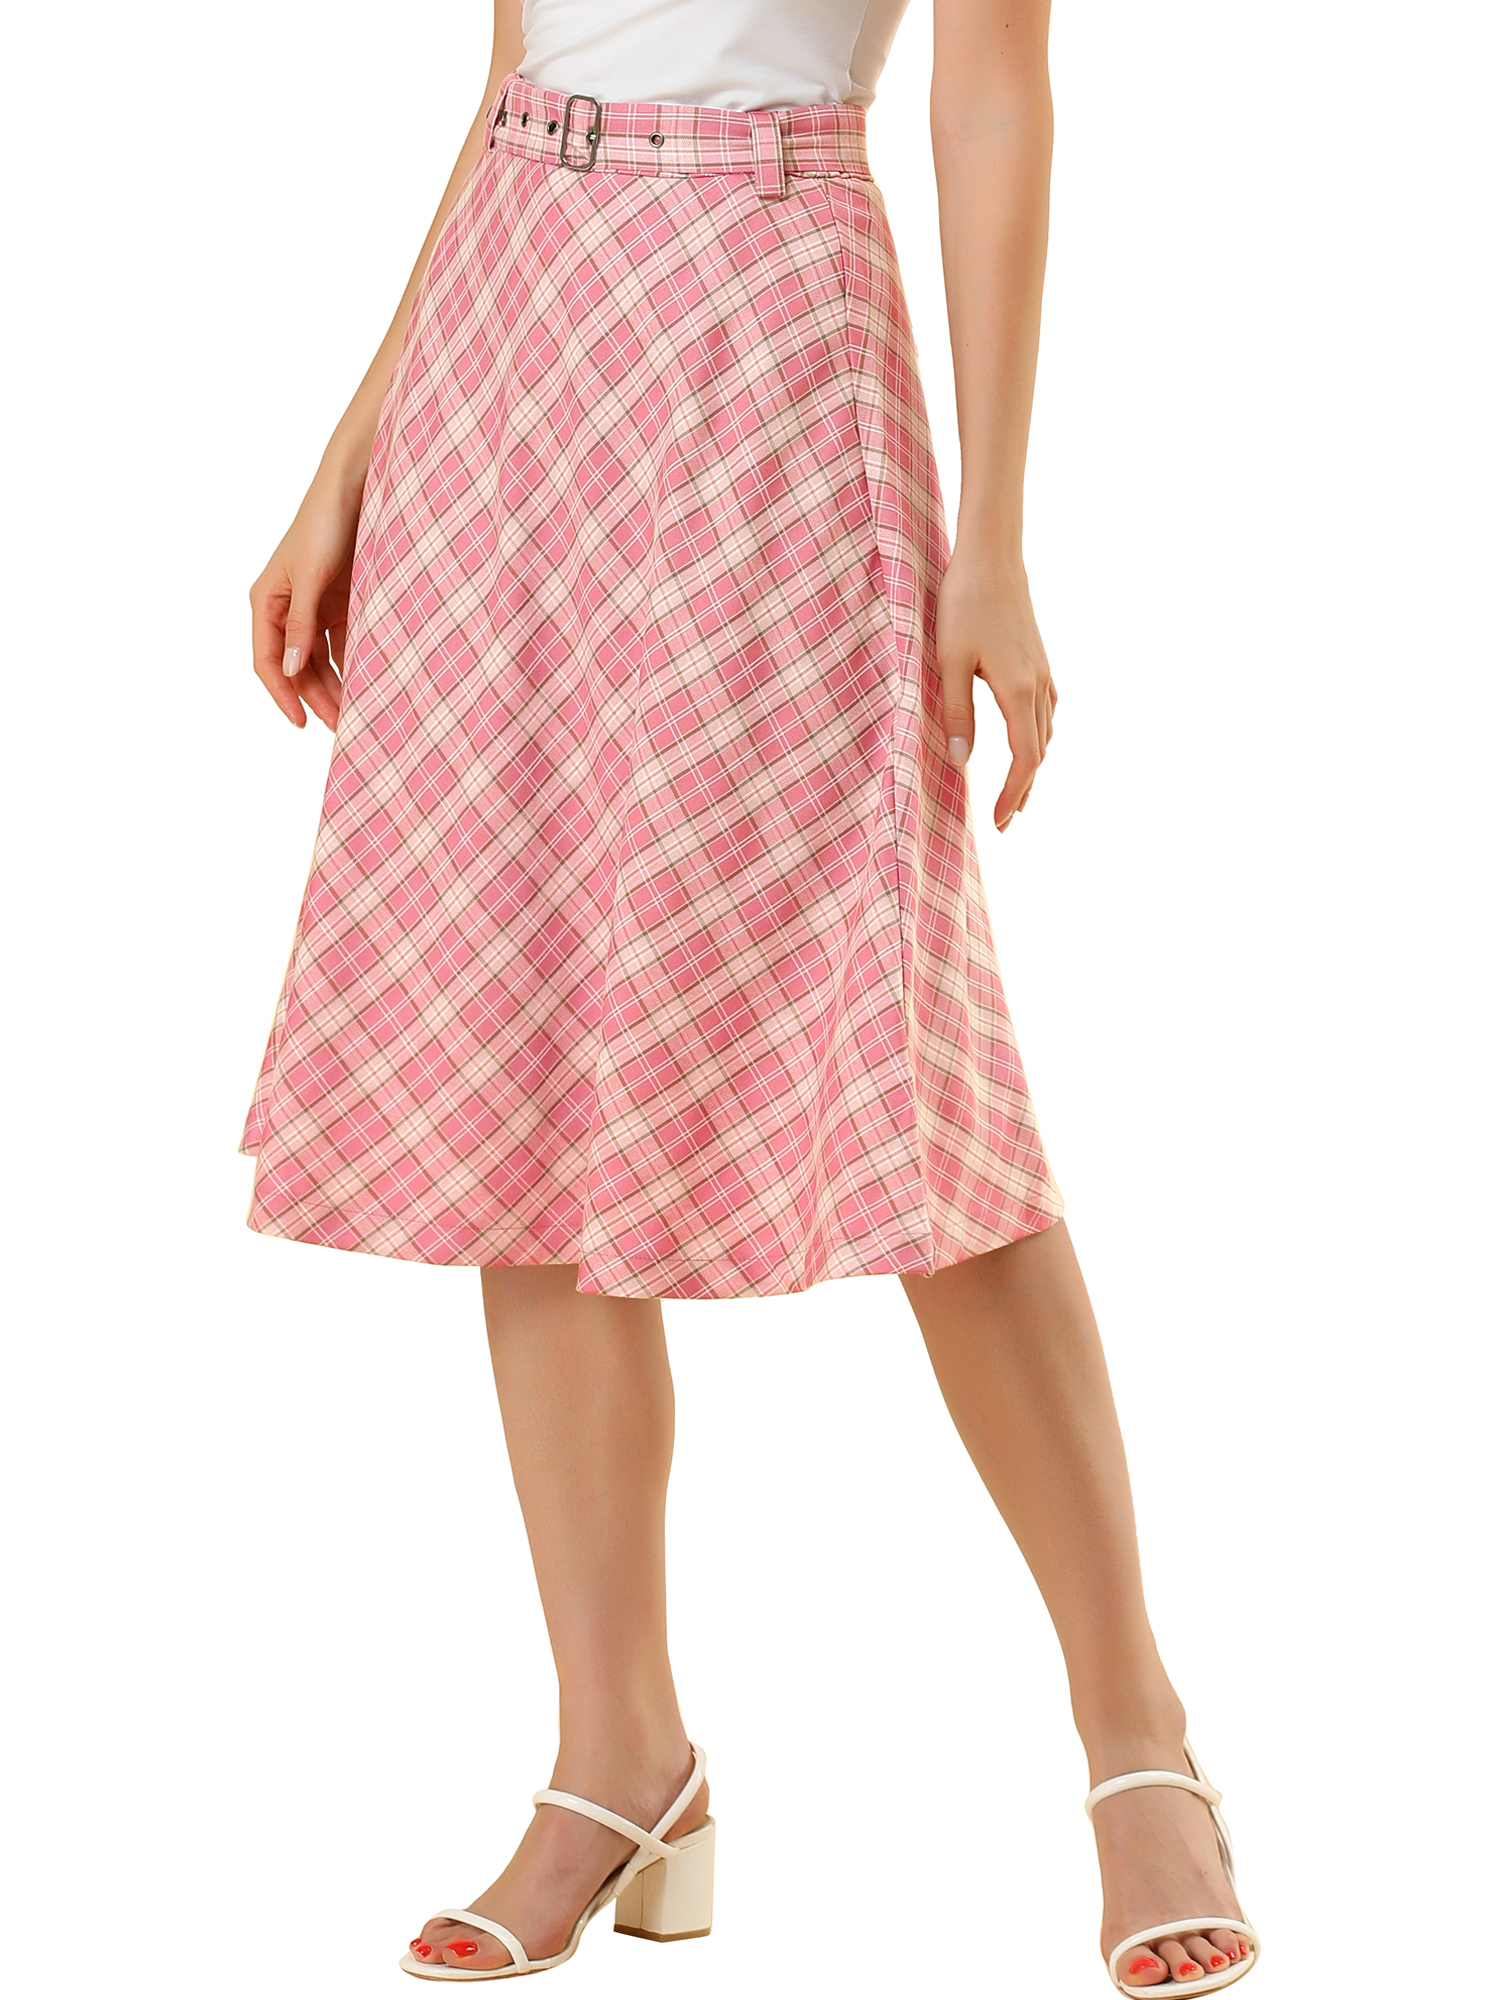 Unique Bargains Women's Plaid High Waist Belted Vintage A-Line Midi Skirt M Pink - image 1 of 8